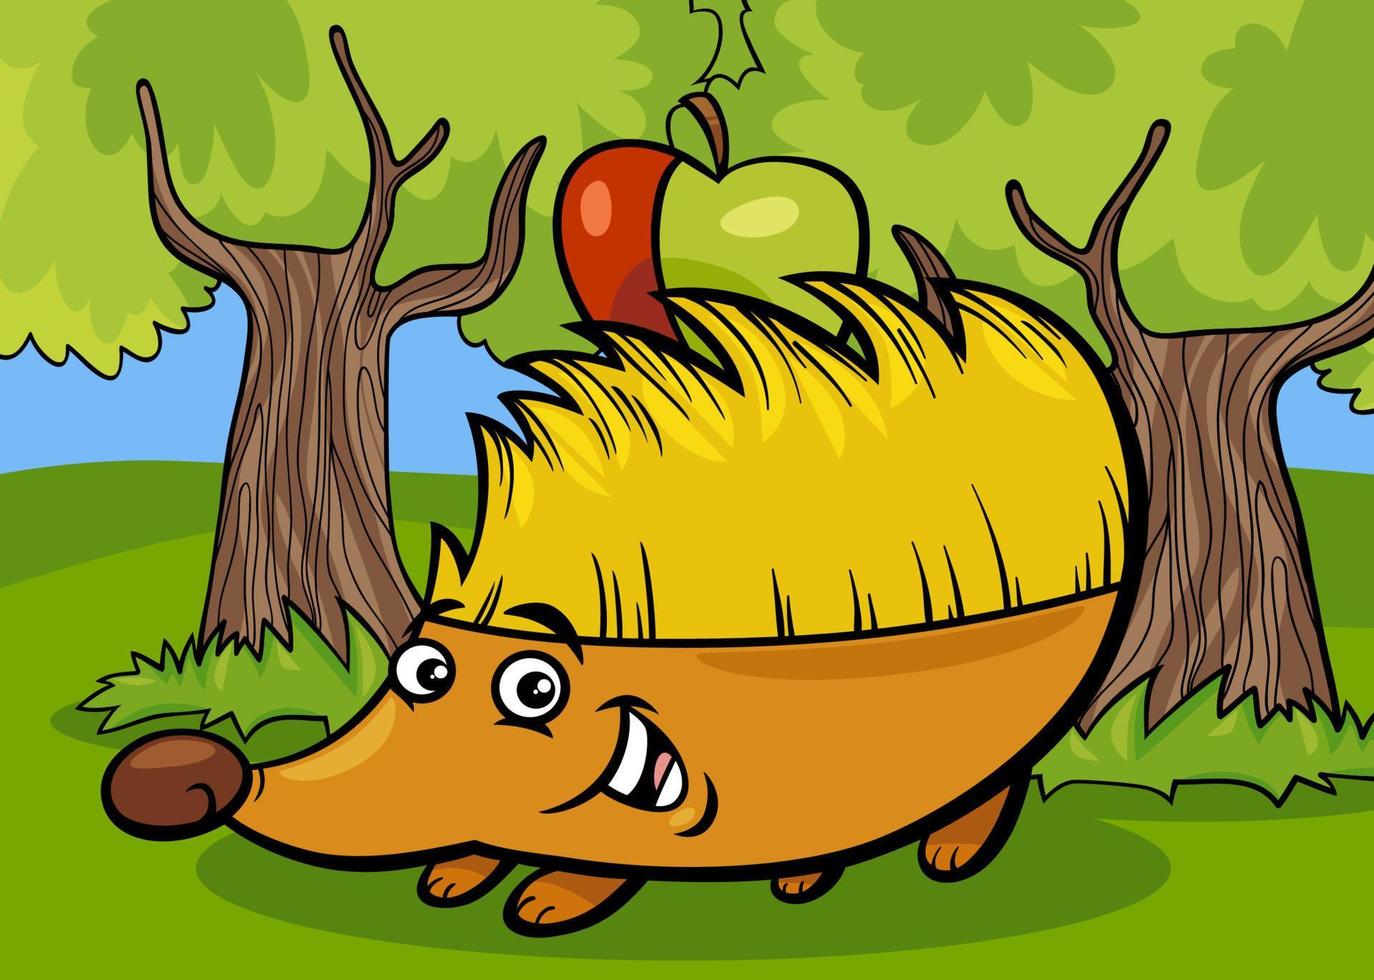 divertido personaje de dibujos animados erizo animal con manzana vector